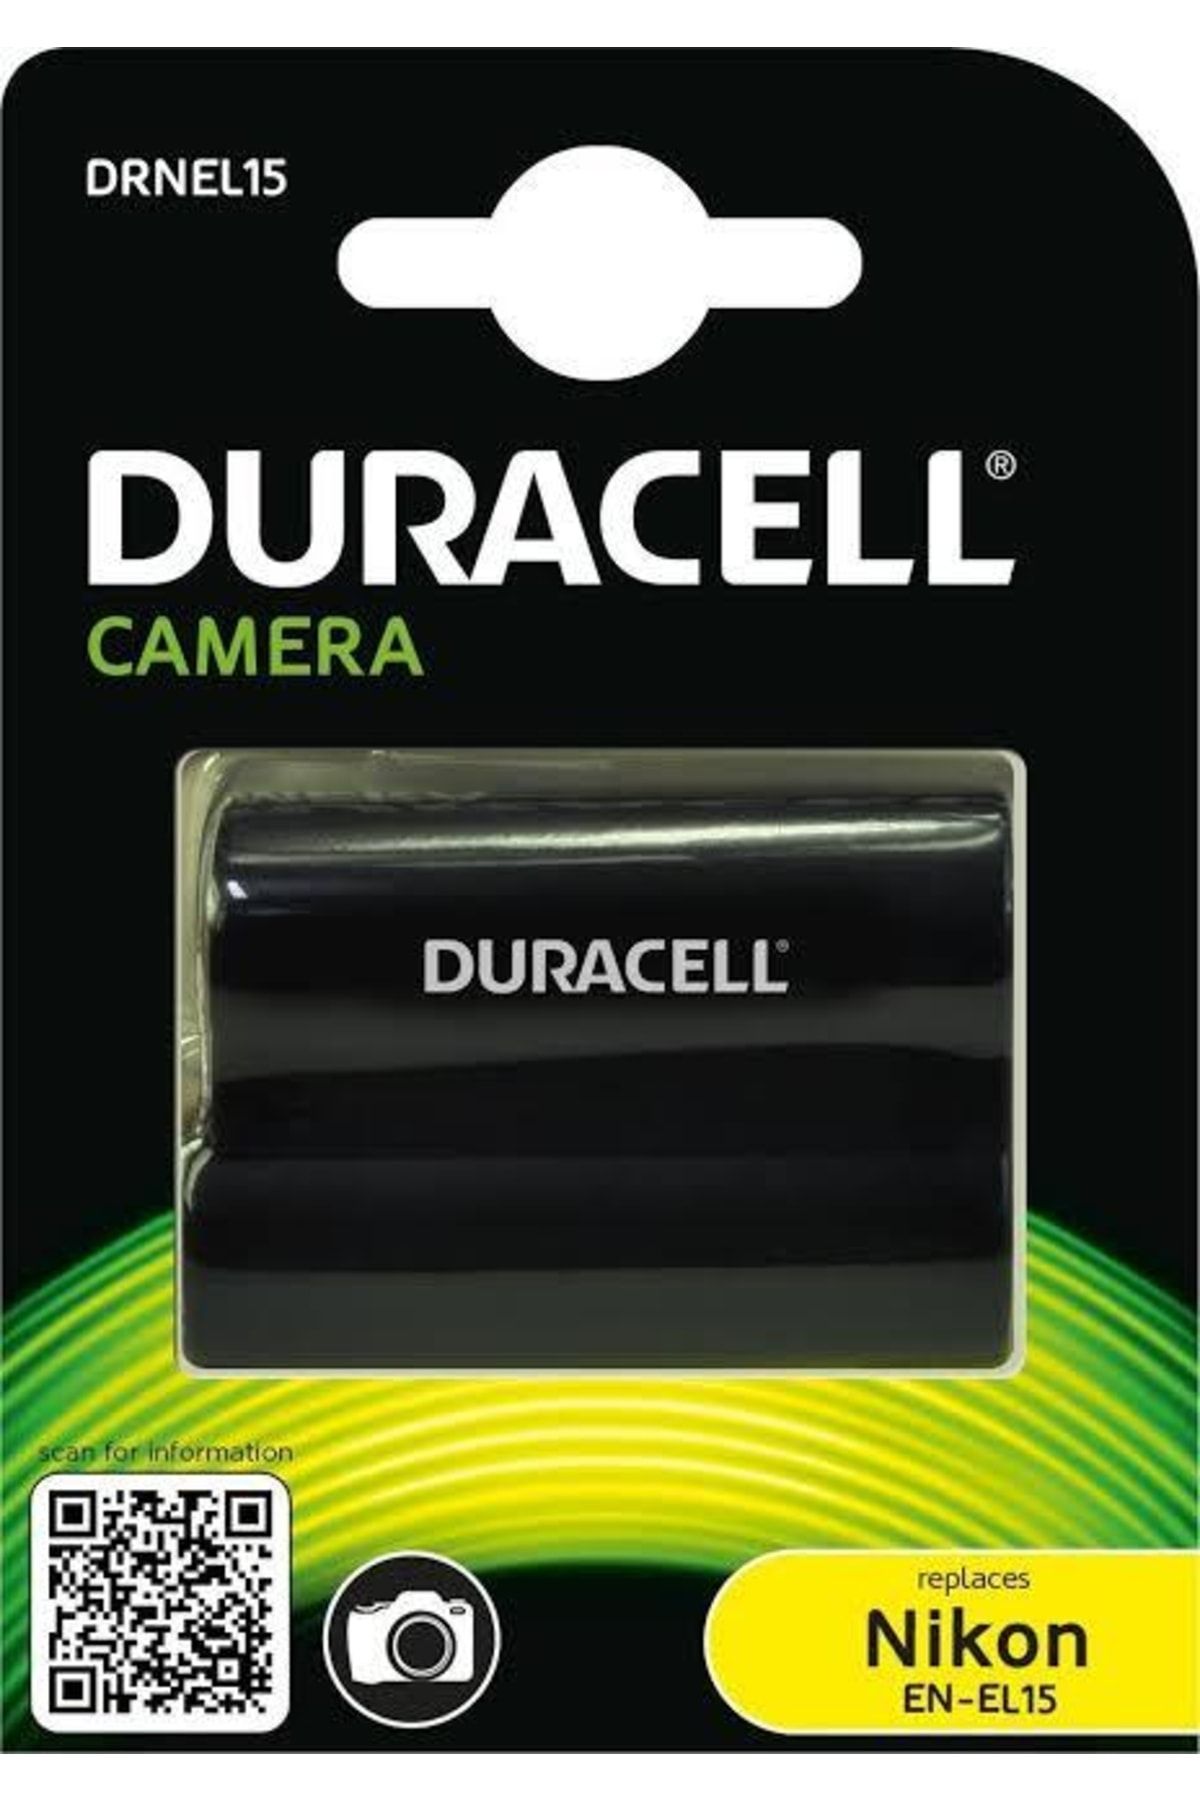 Duracell Drnel15 Nikon En-el15 Batarya